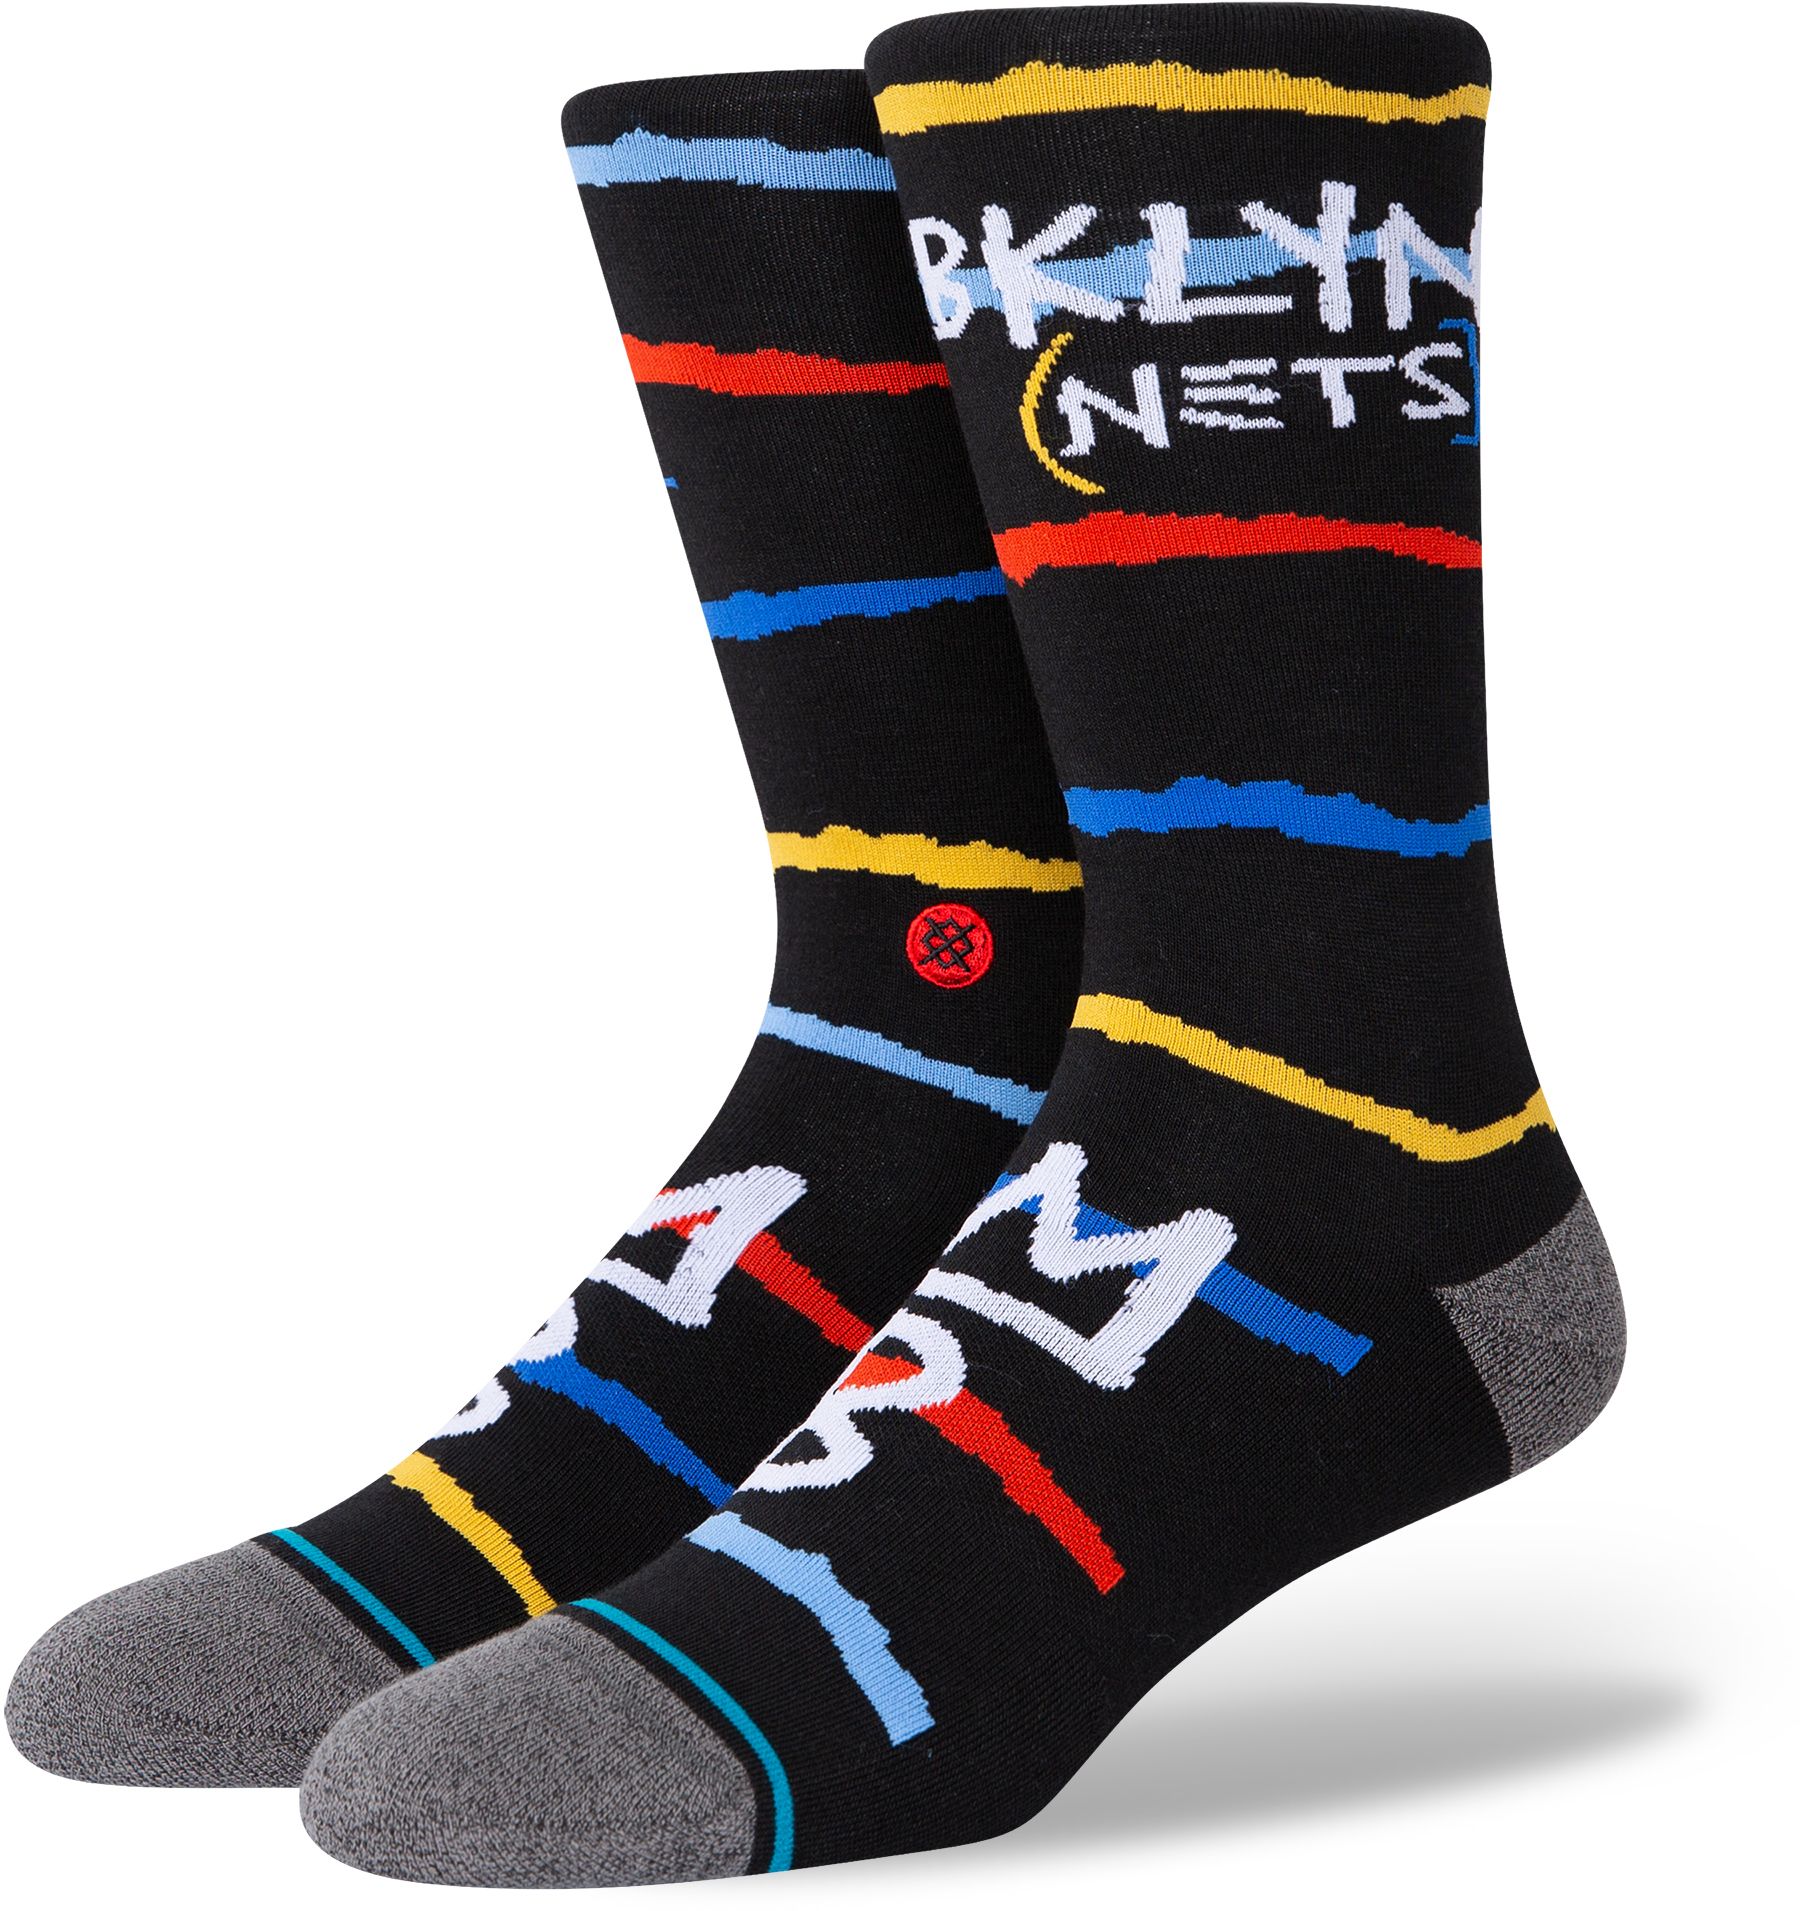 brooklyn nets city socks